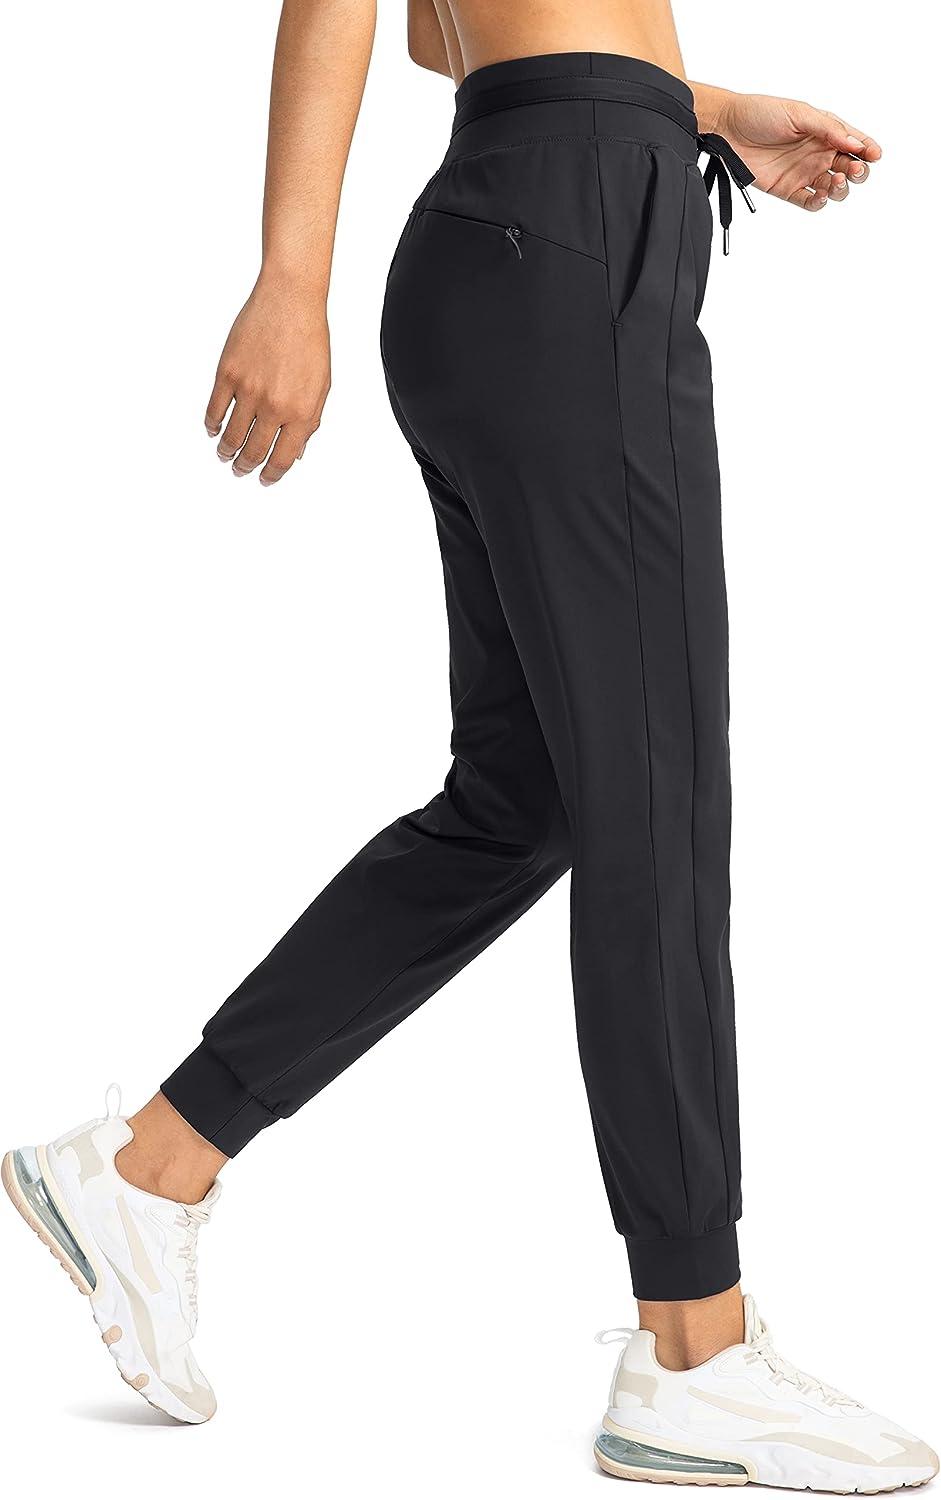 Women's Workout Pants Black Grey High Waist Sweatpants Sports